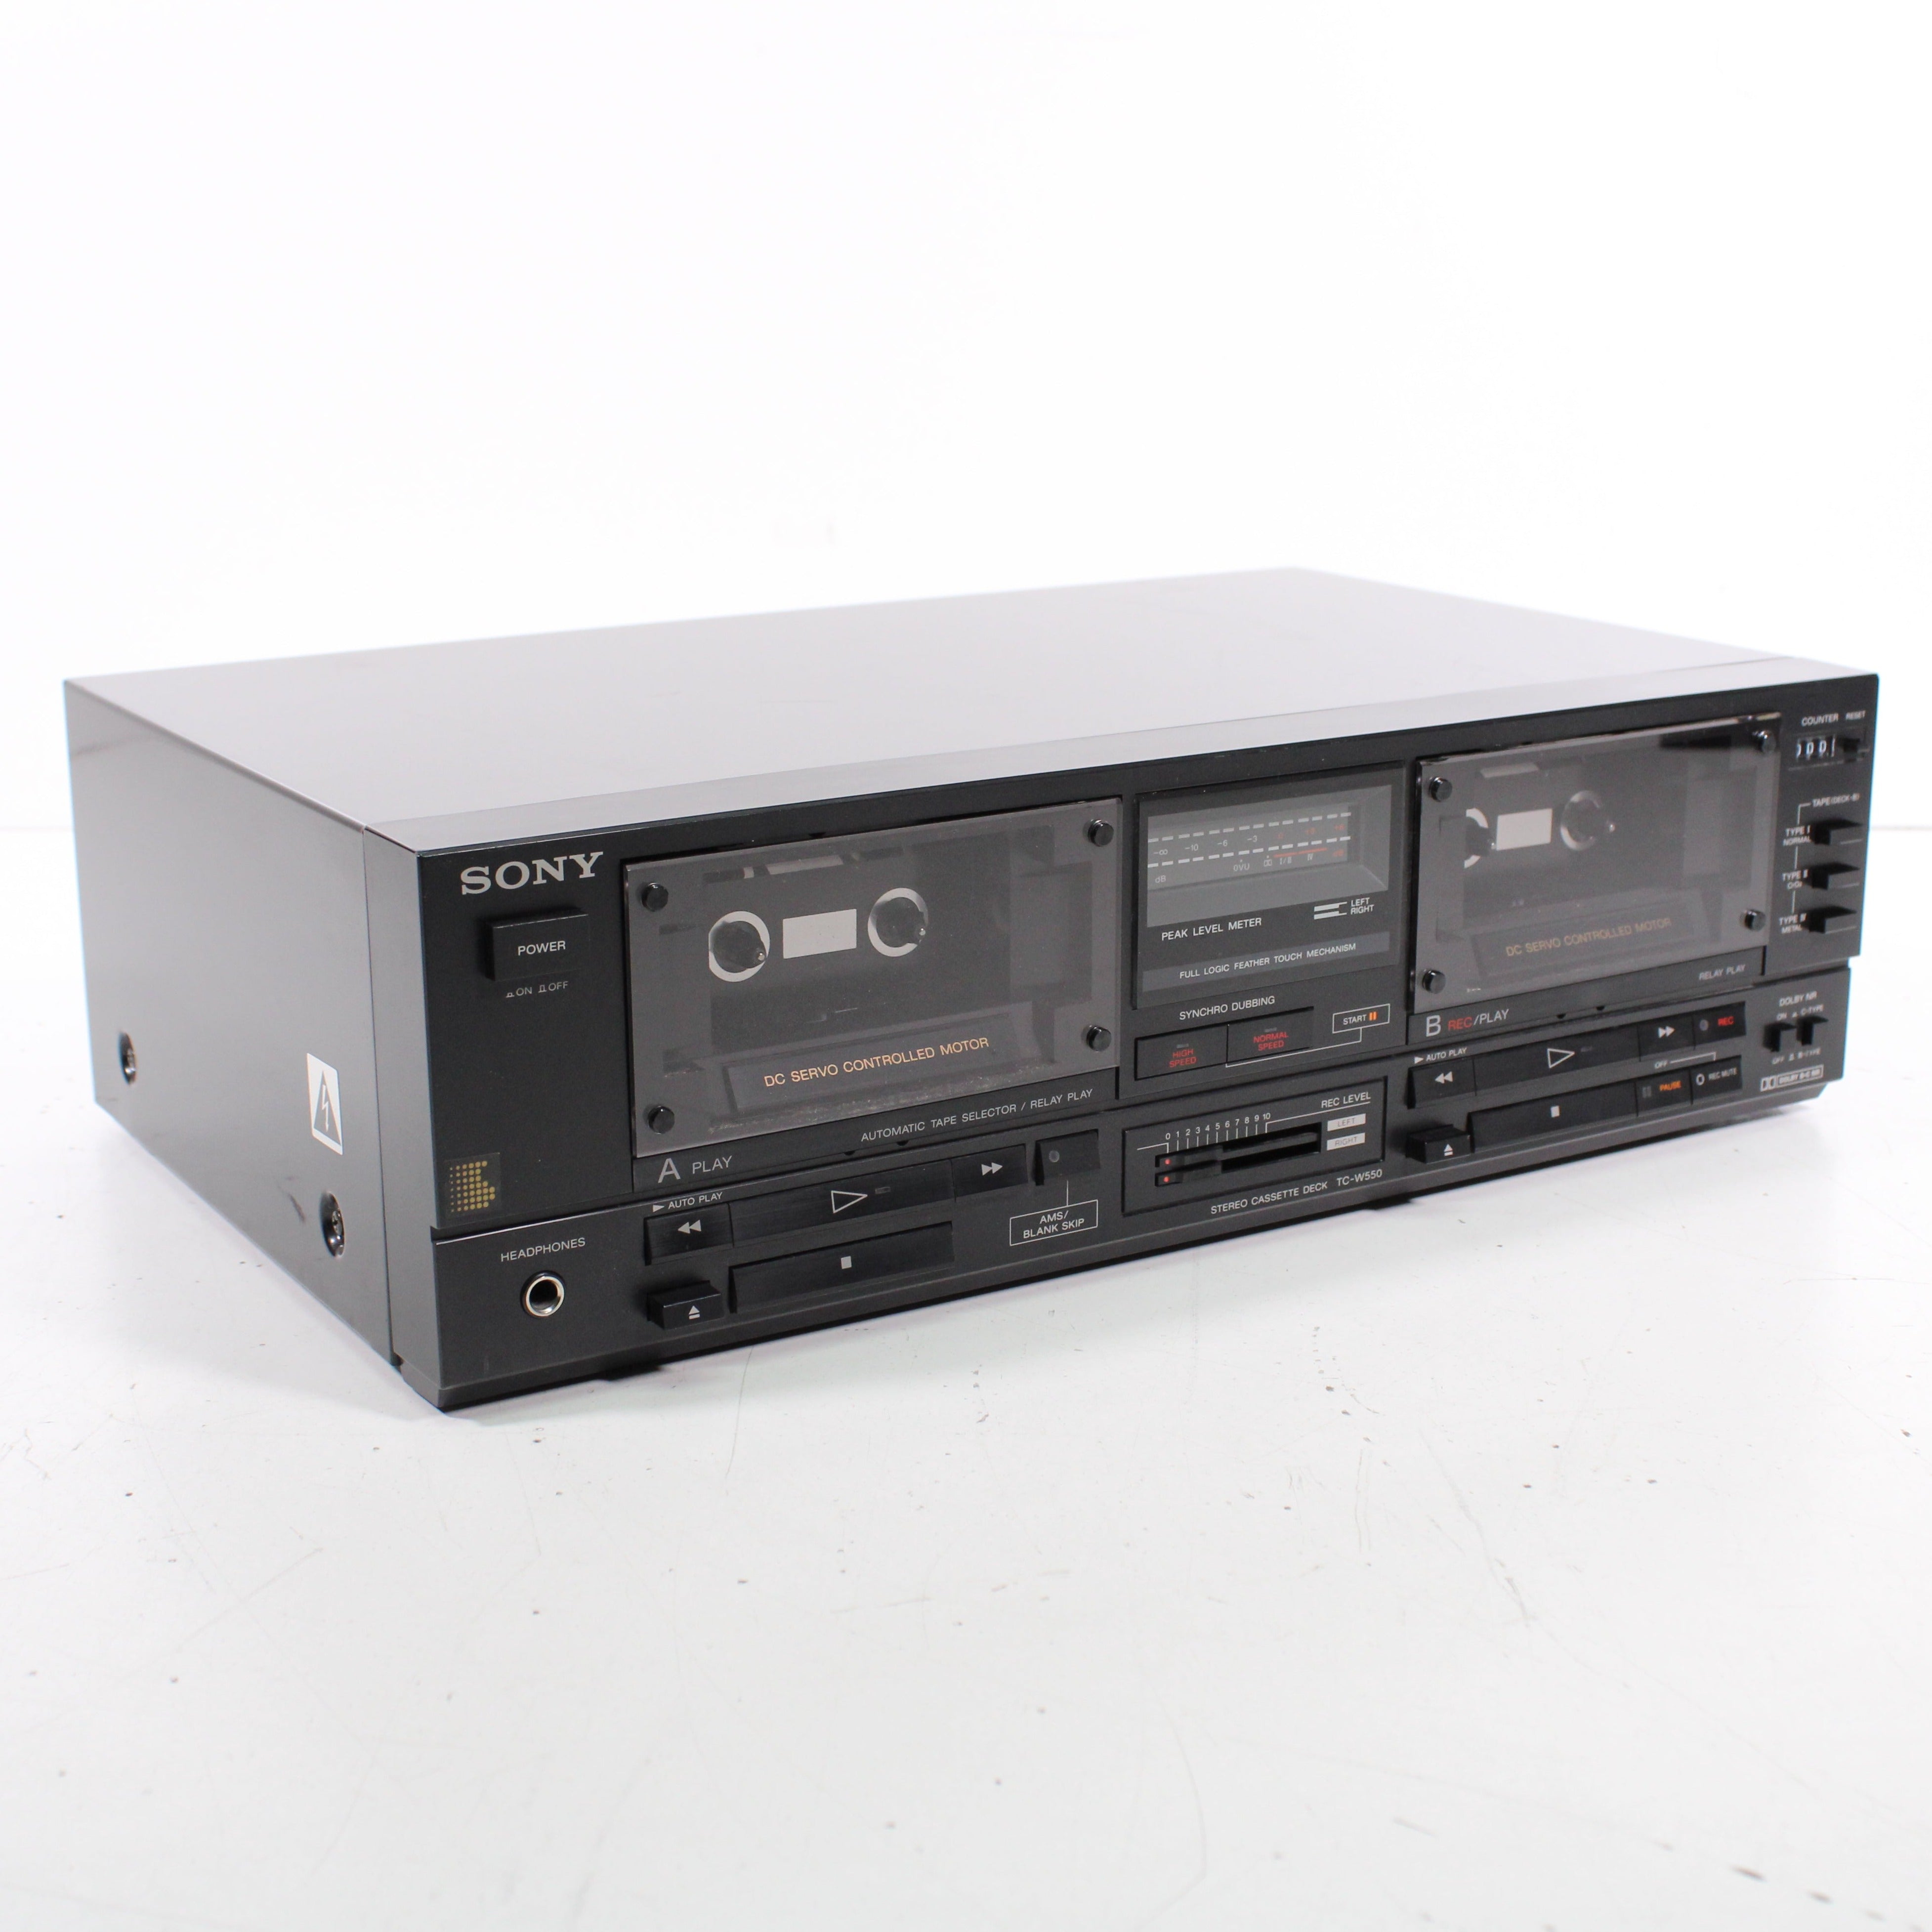 Sony TC-W550 Double Stereo Cassette Deck (1988)